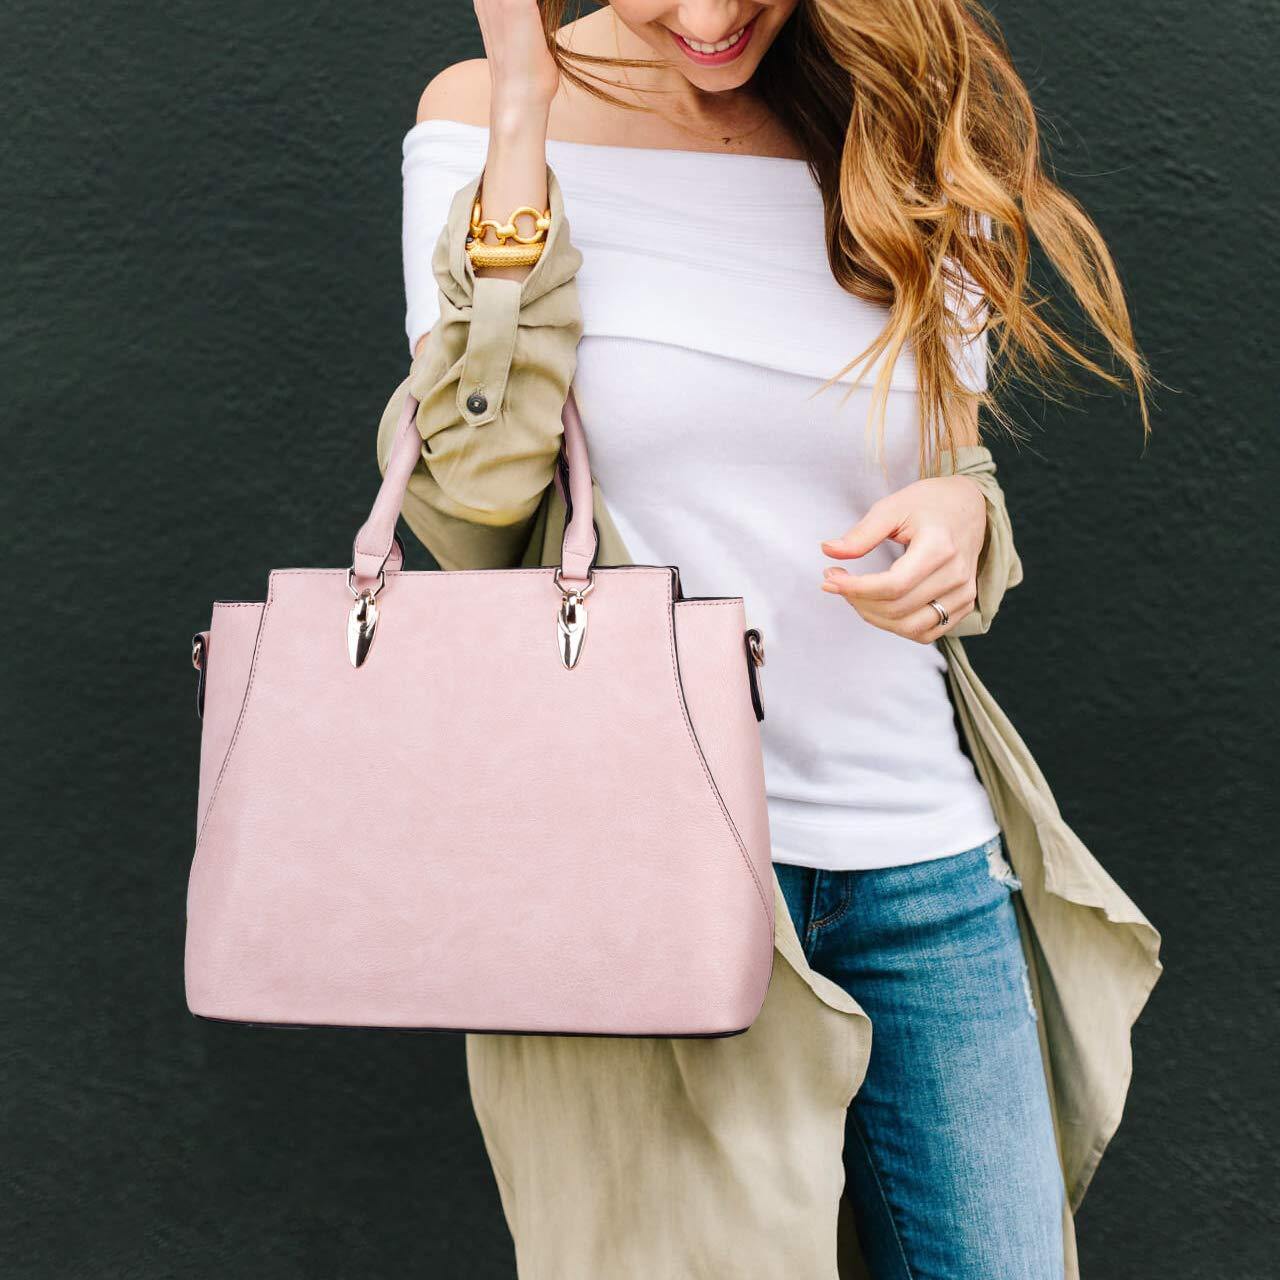 Fashion Handbag for Women Ladies Top Handle Satchel Shoulder Bags